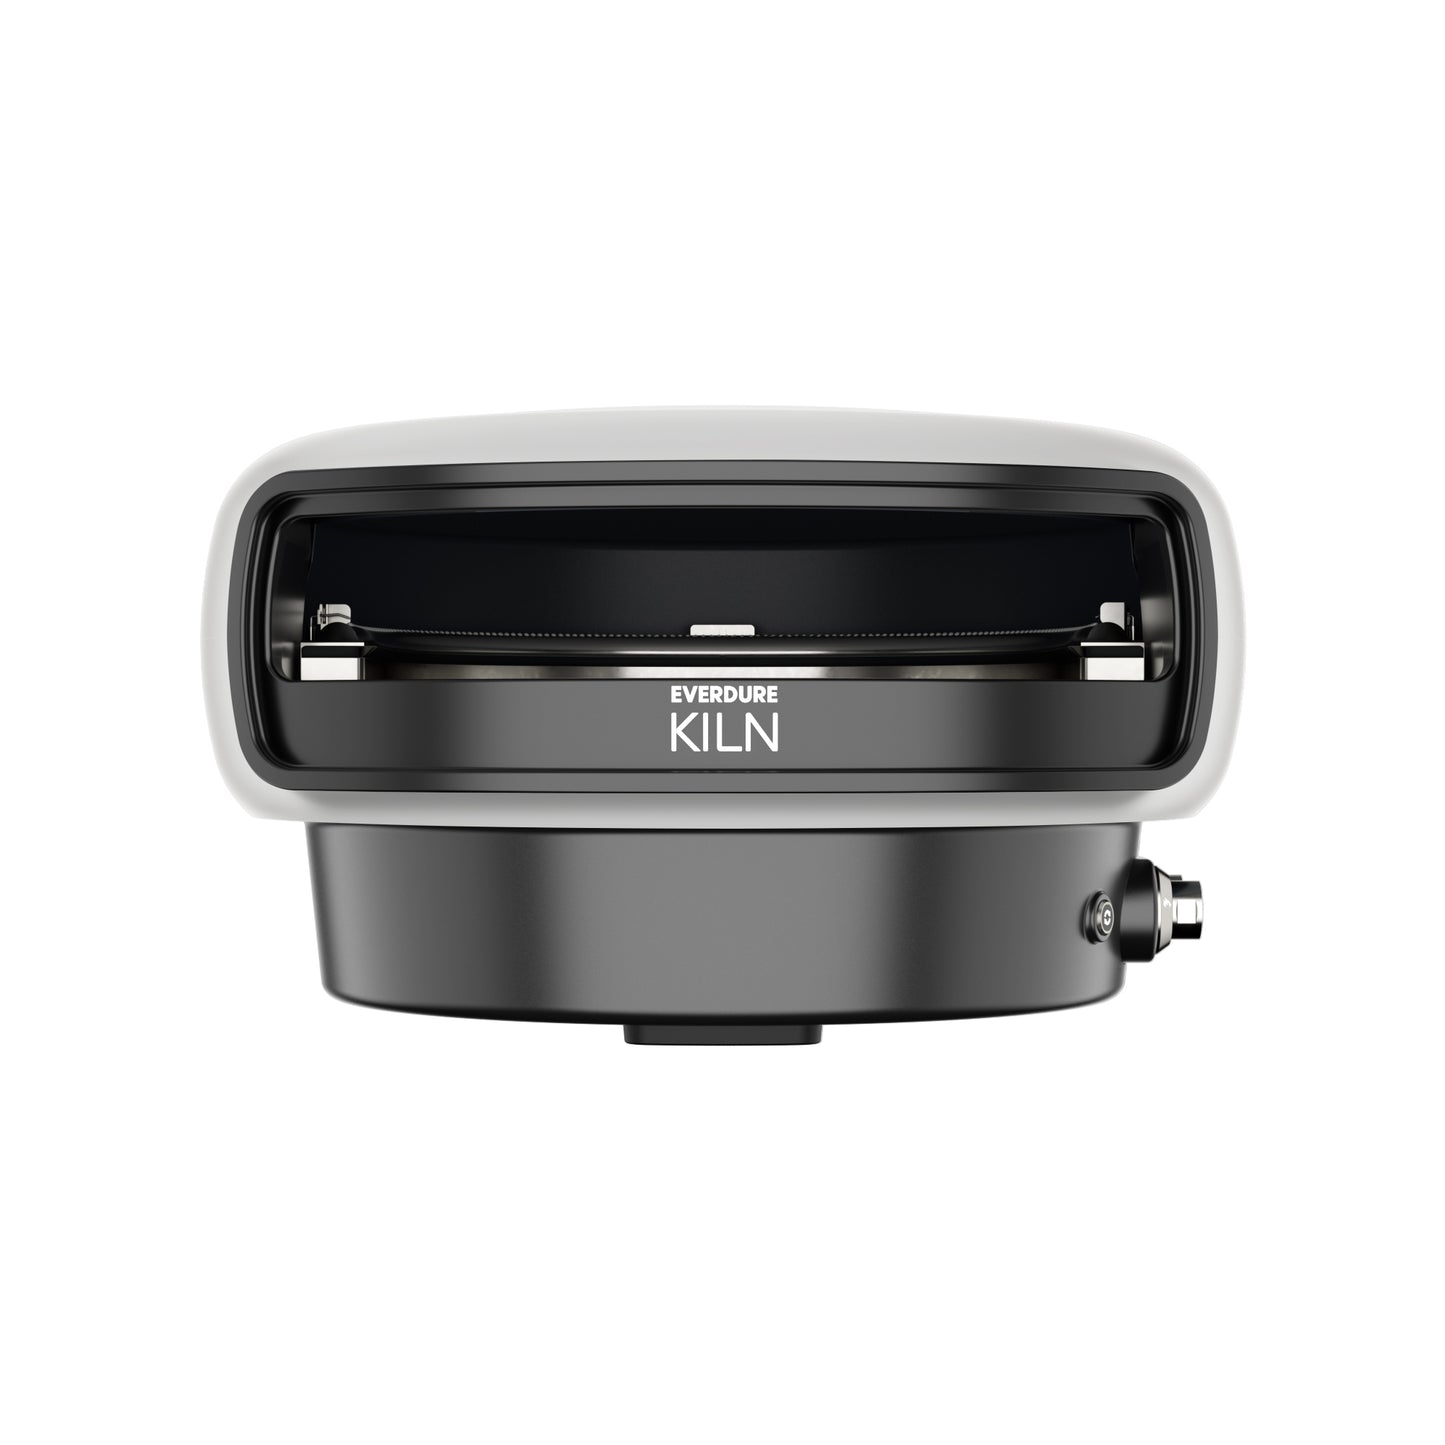 KILN R Series Oven